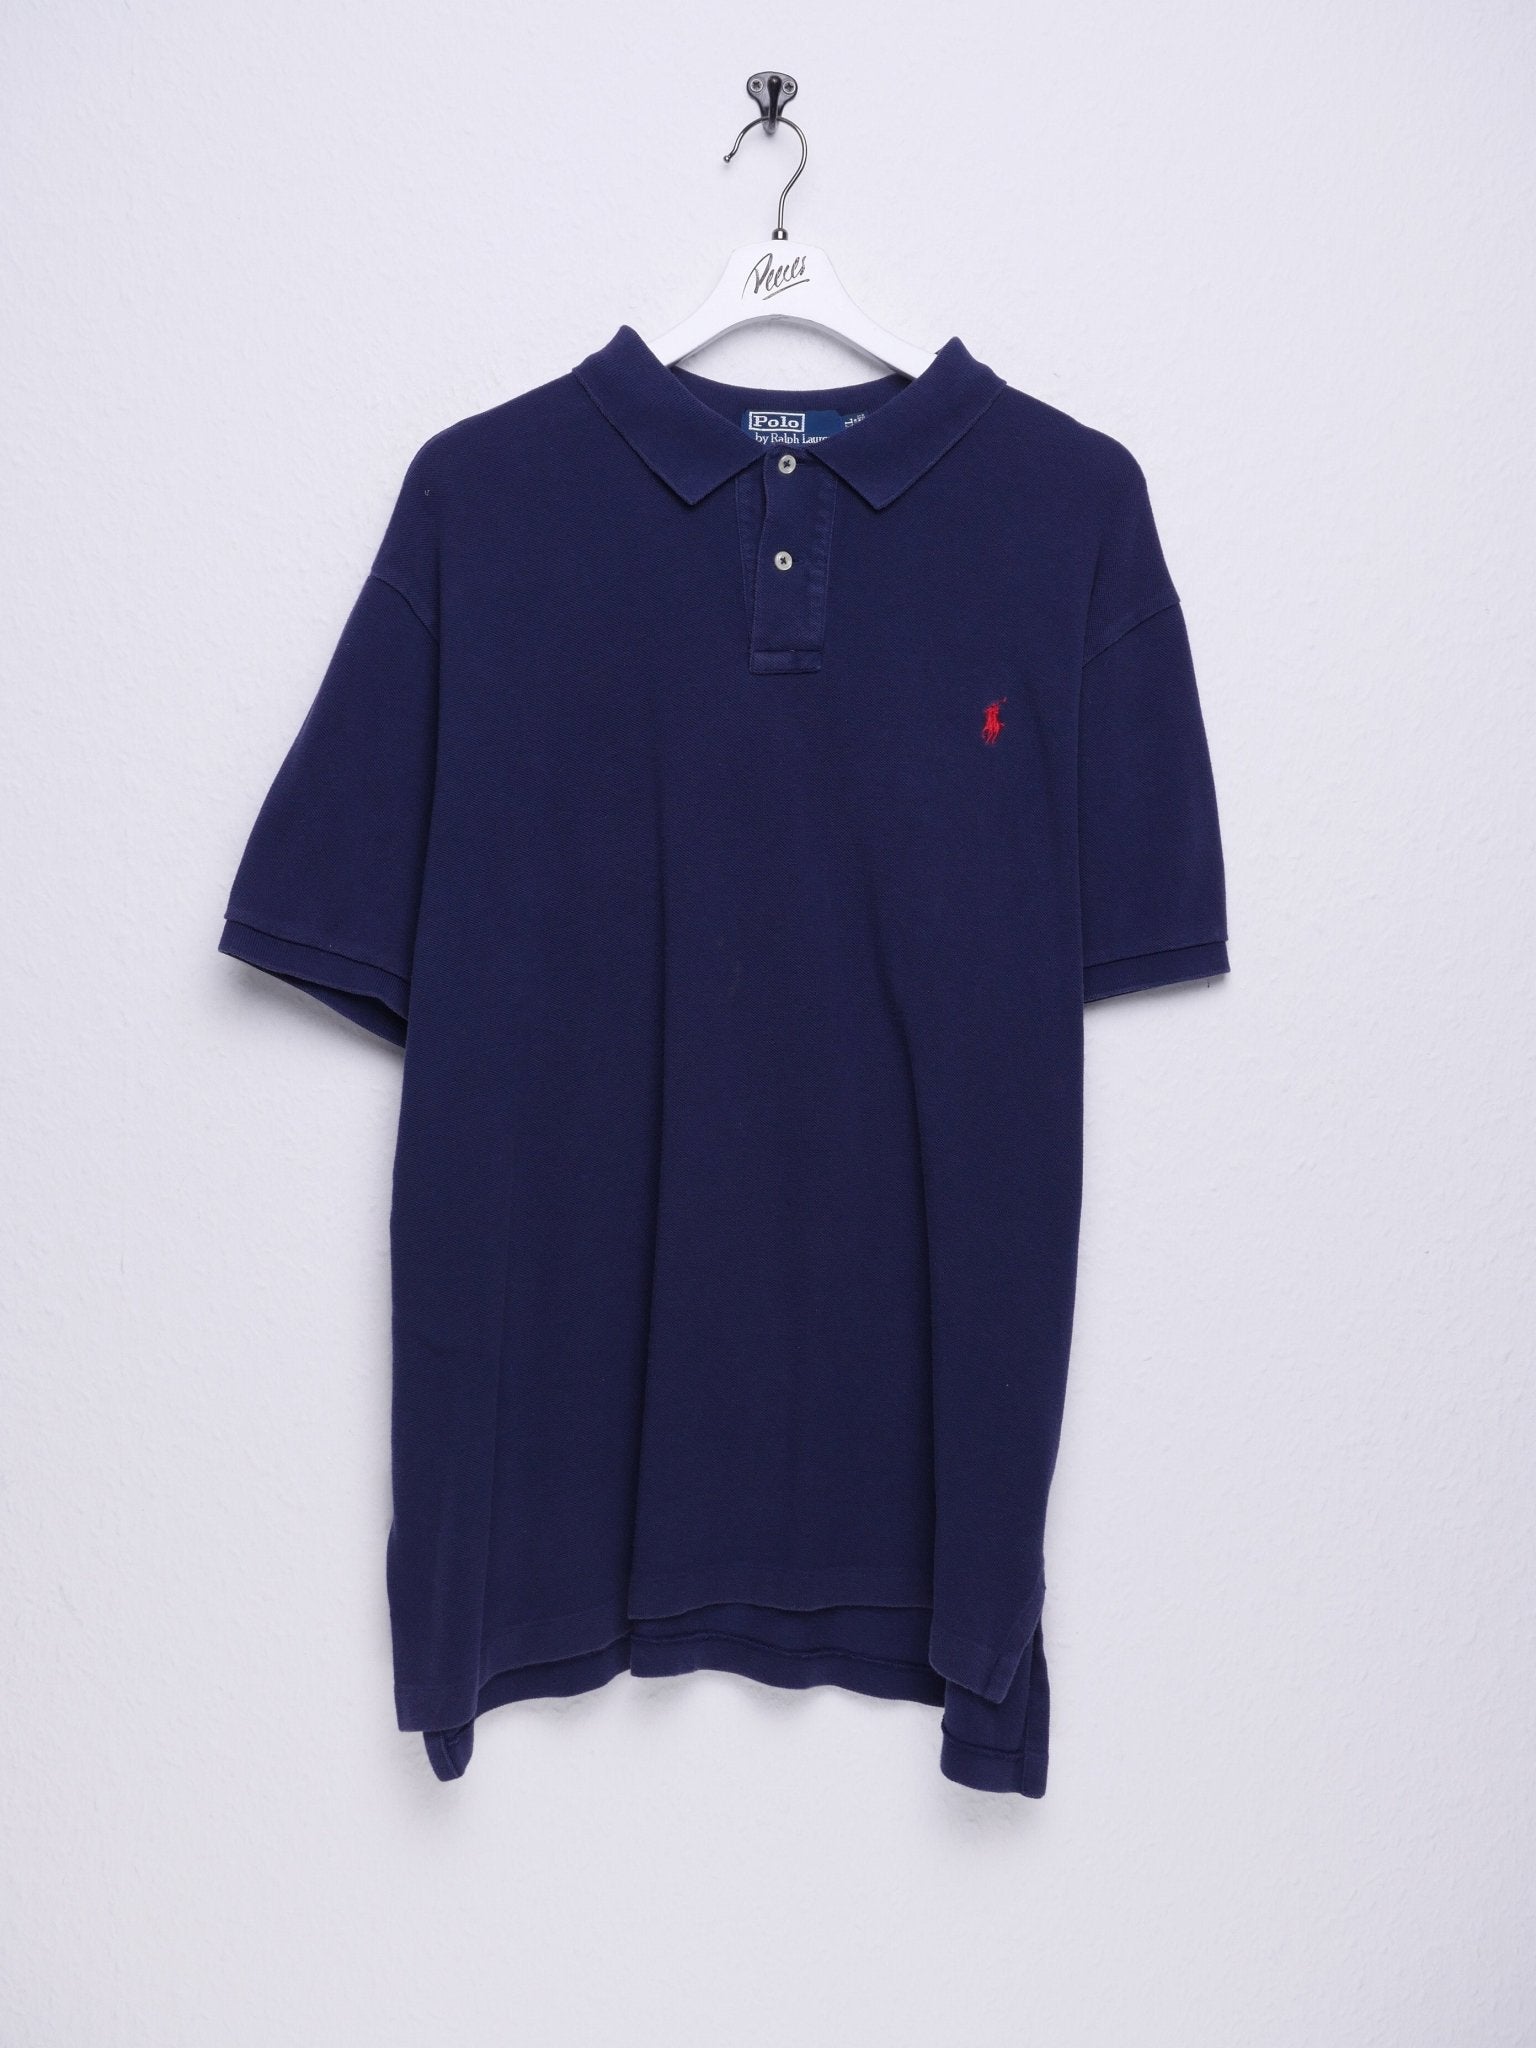 ralph lauren embroidered Logo dark blue Polo Shirt - Peeces